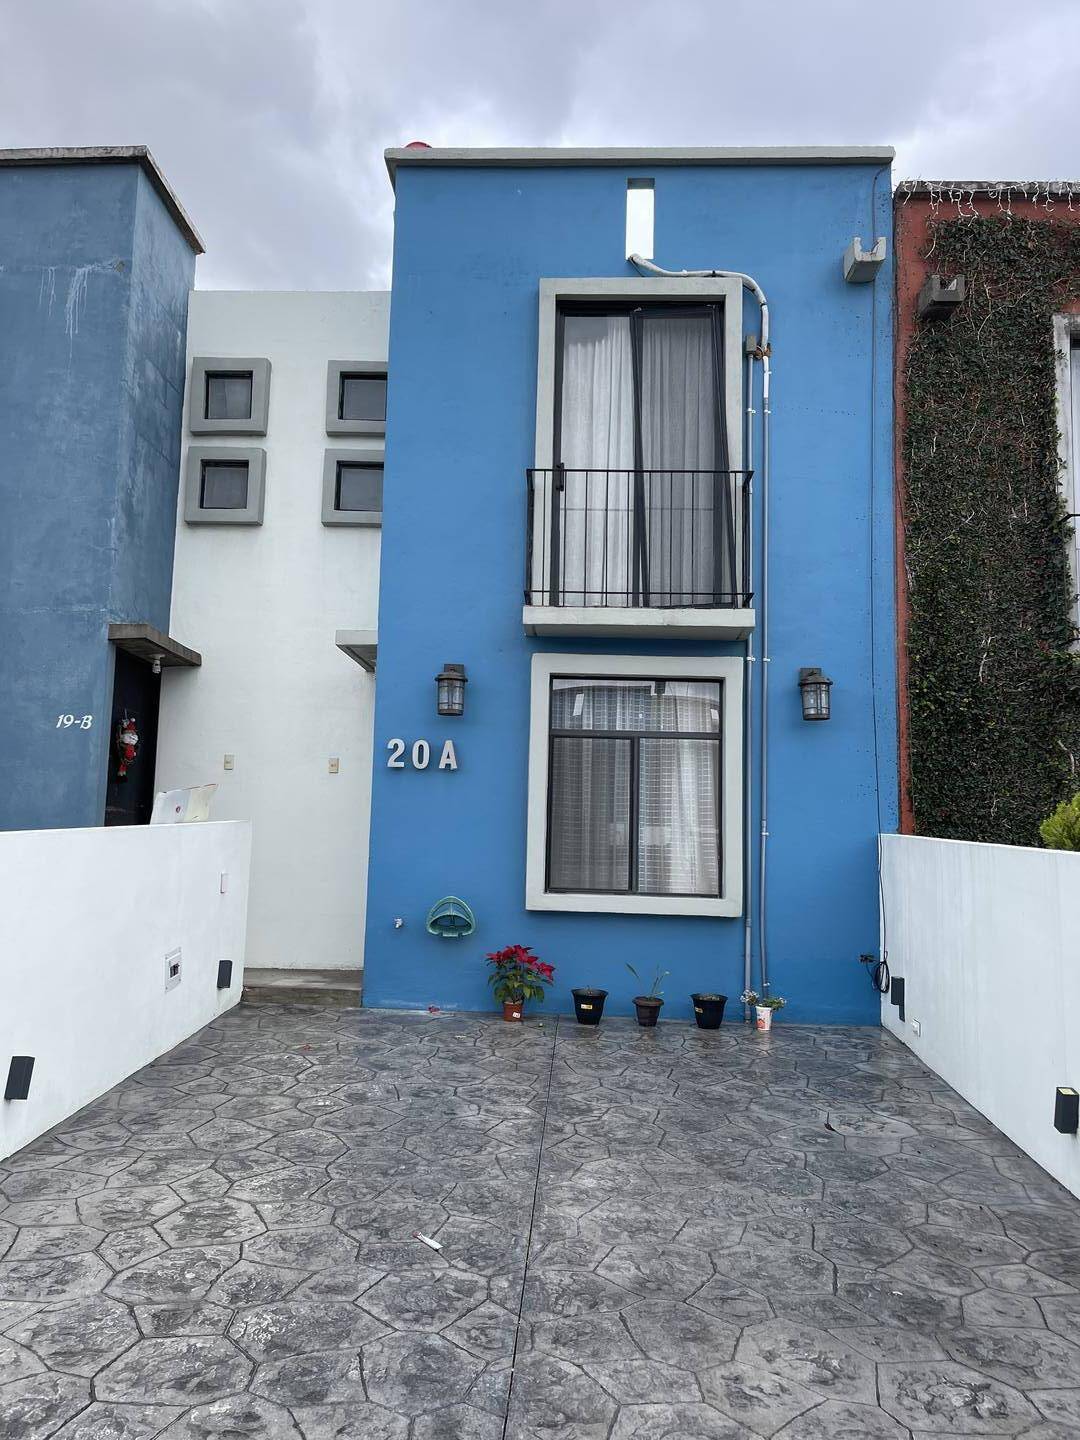 #822 - Casa para Renta en Tijuana - BC